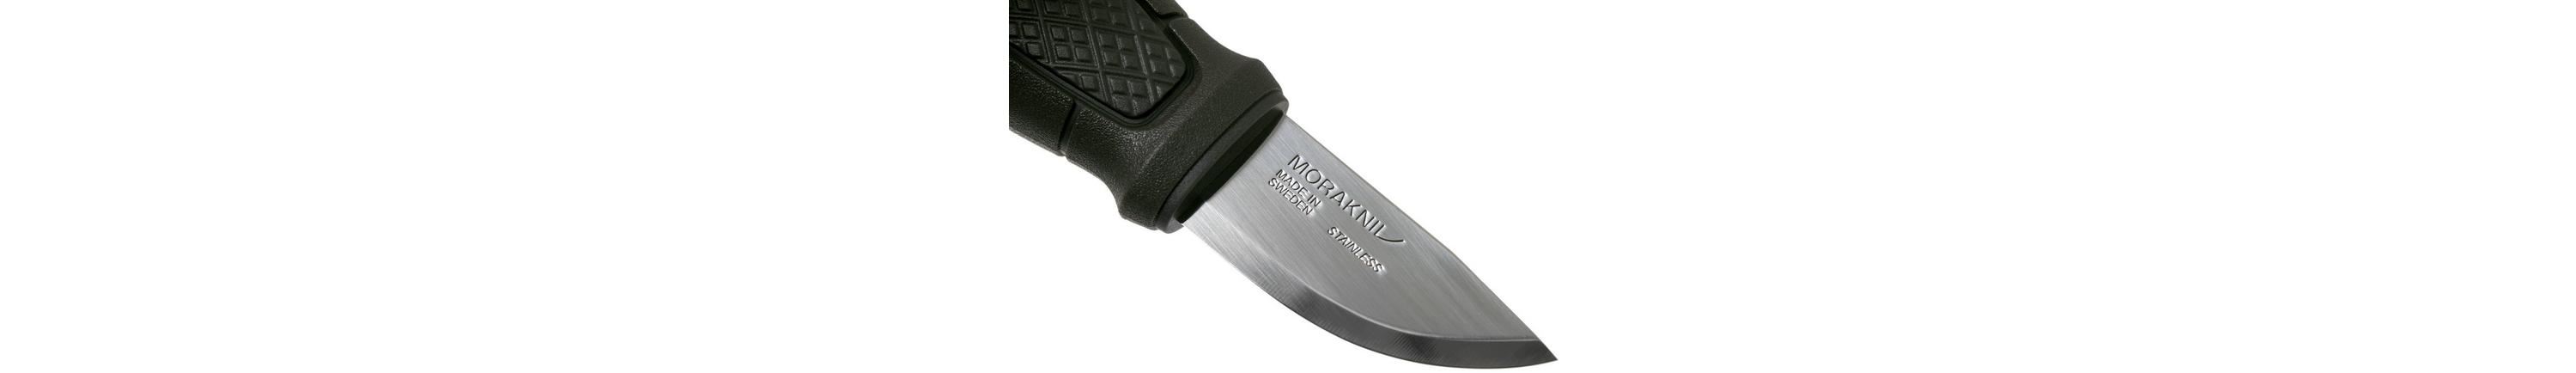 Morakniv Eldris LightDuty Dark Grey 13843 neck knife